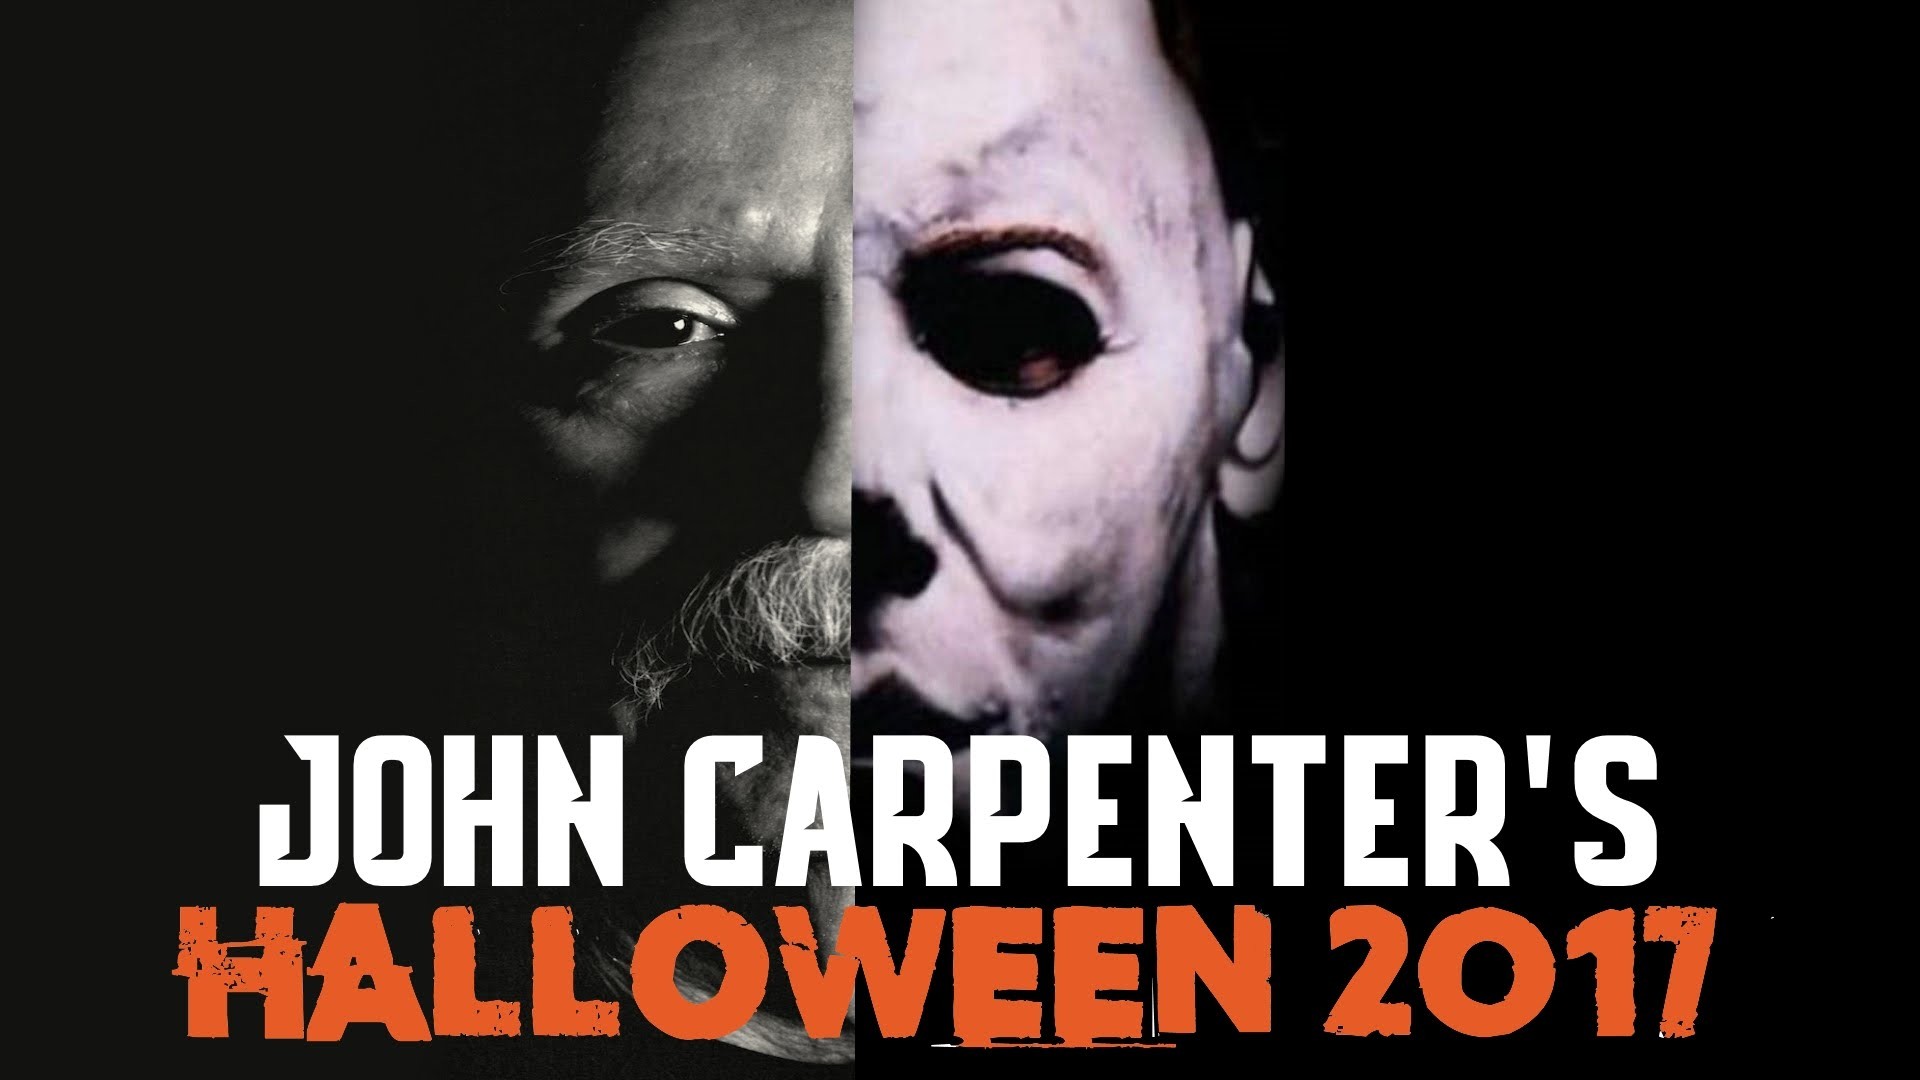 1920x1080 John Carpenters Halloween 2017 Wallpaper 1920Ã1080